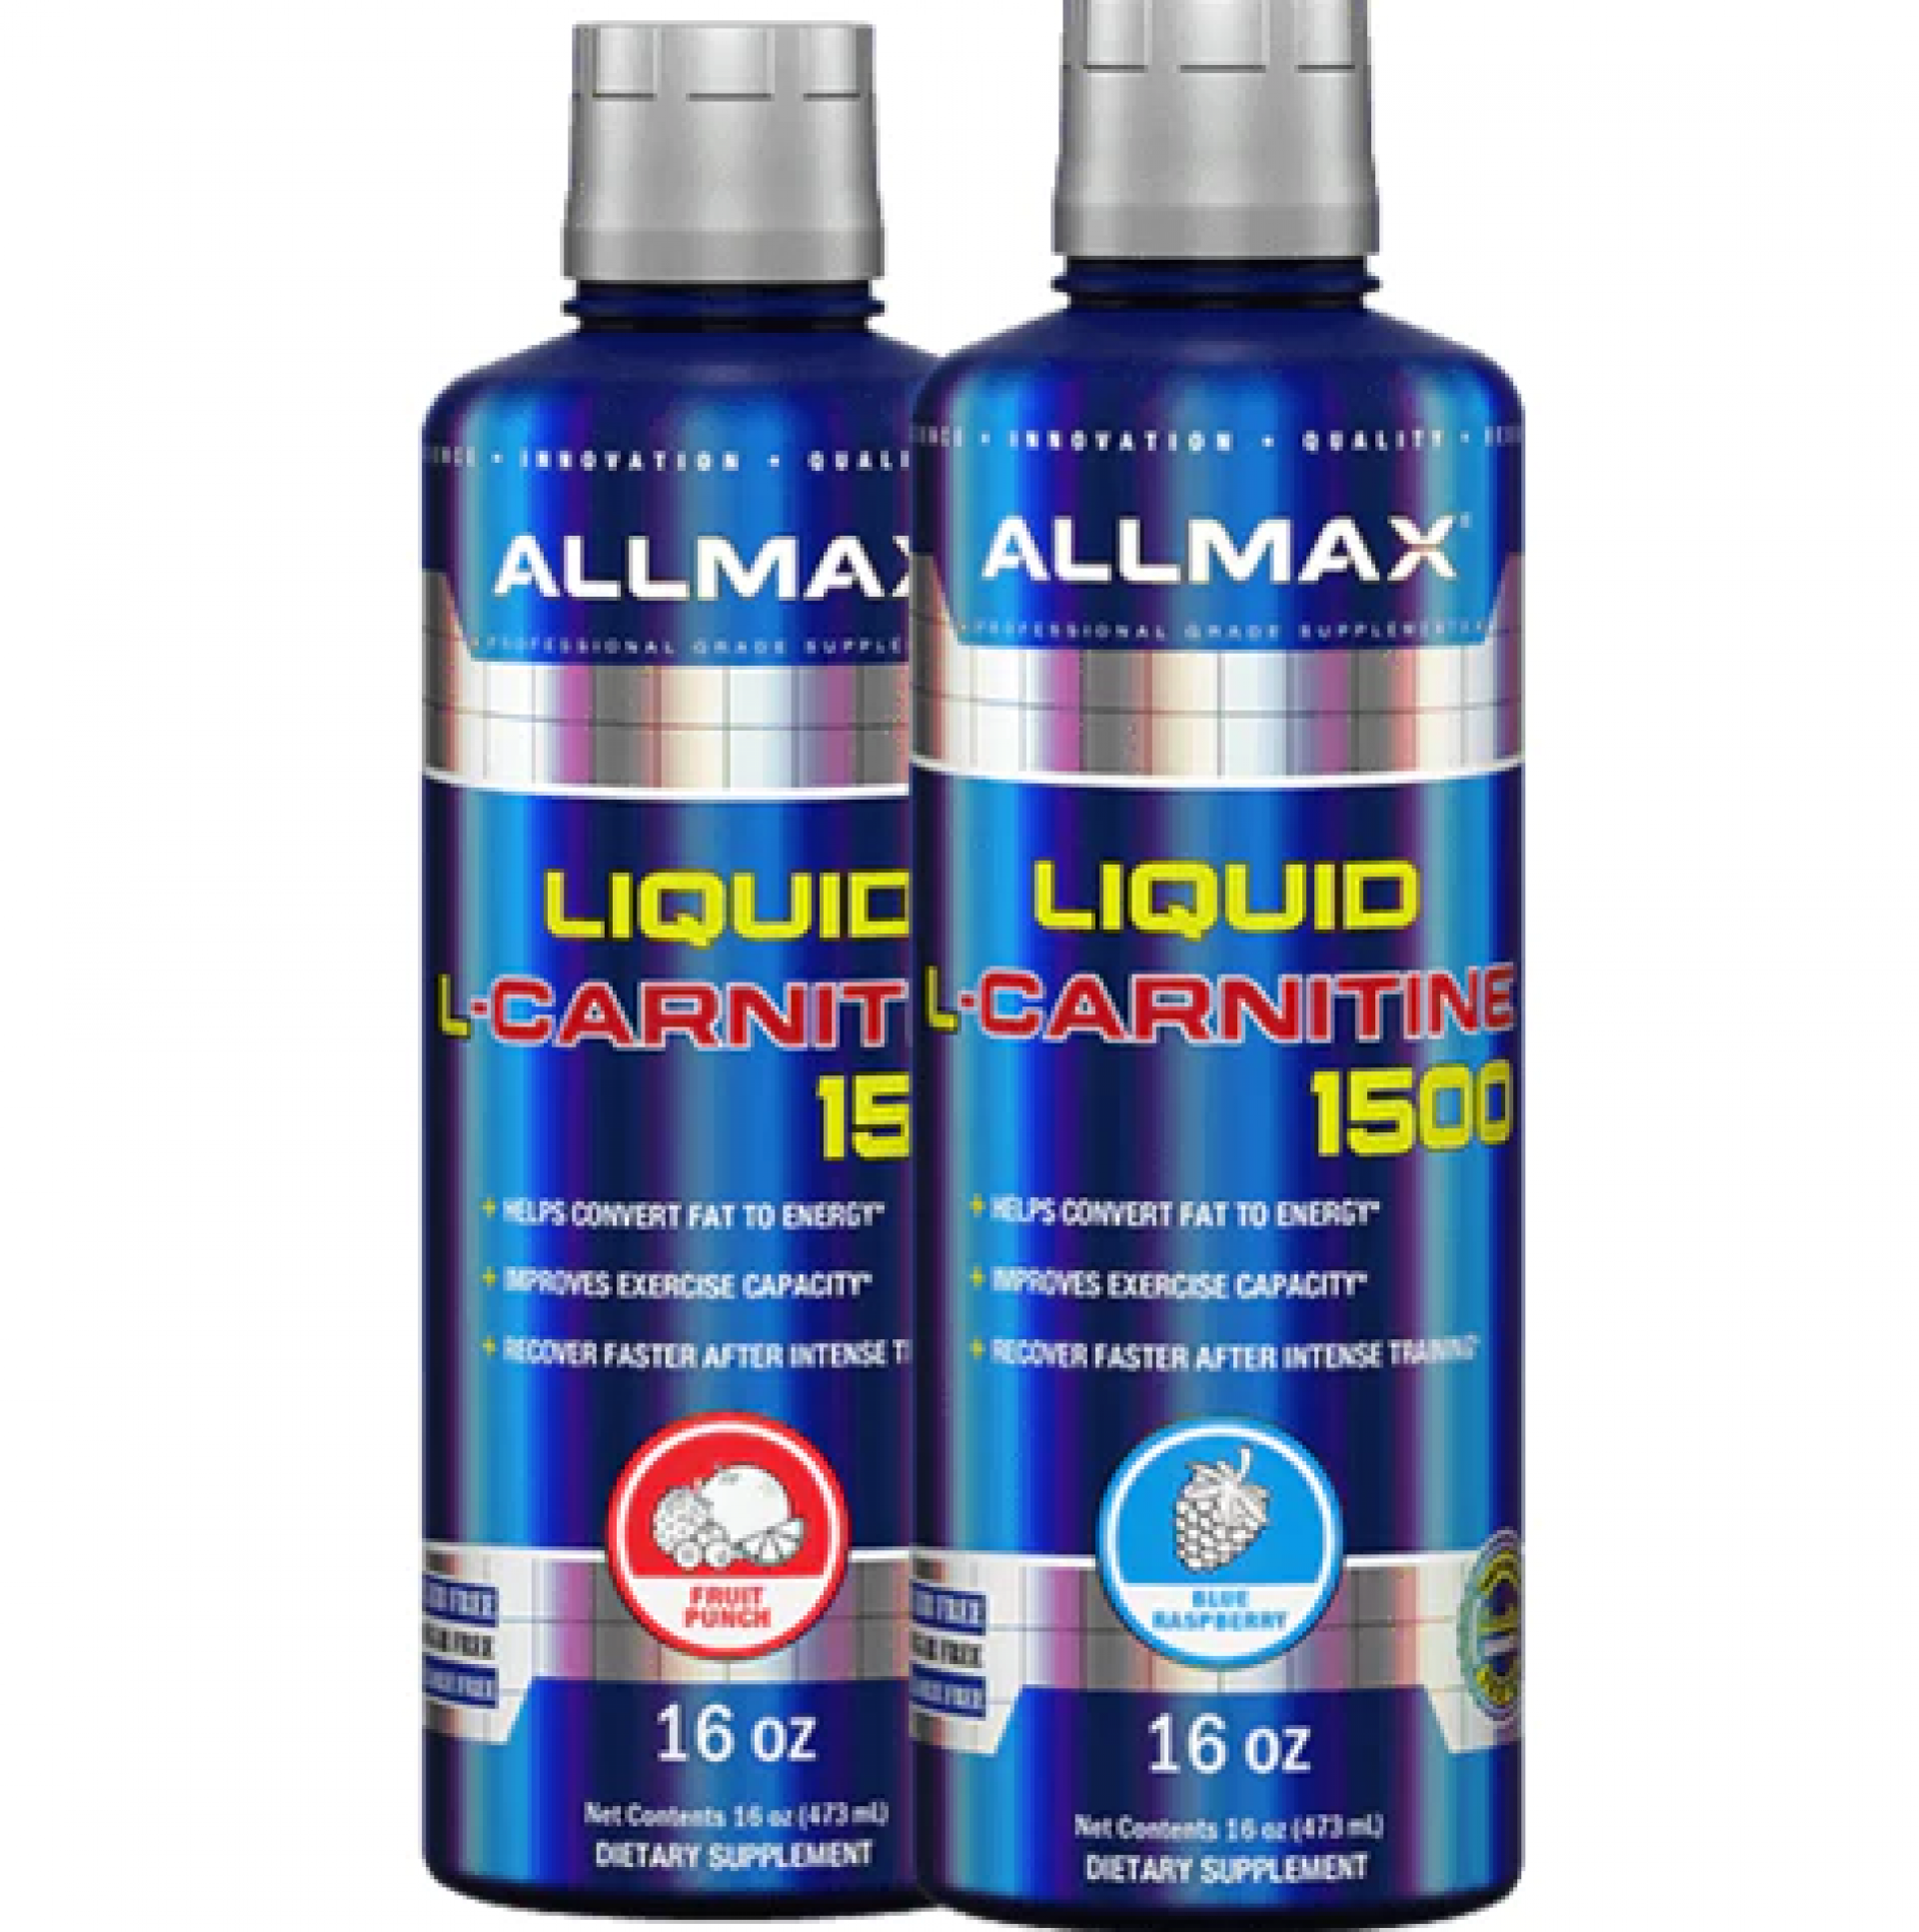 Allmax Liquid Carnitine - $19.99